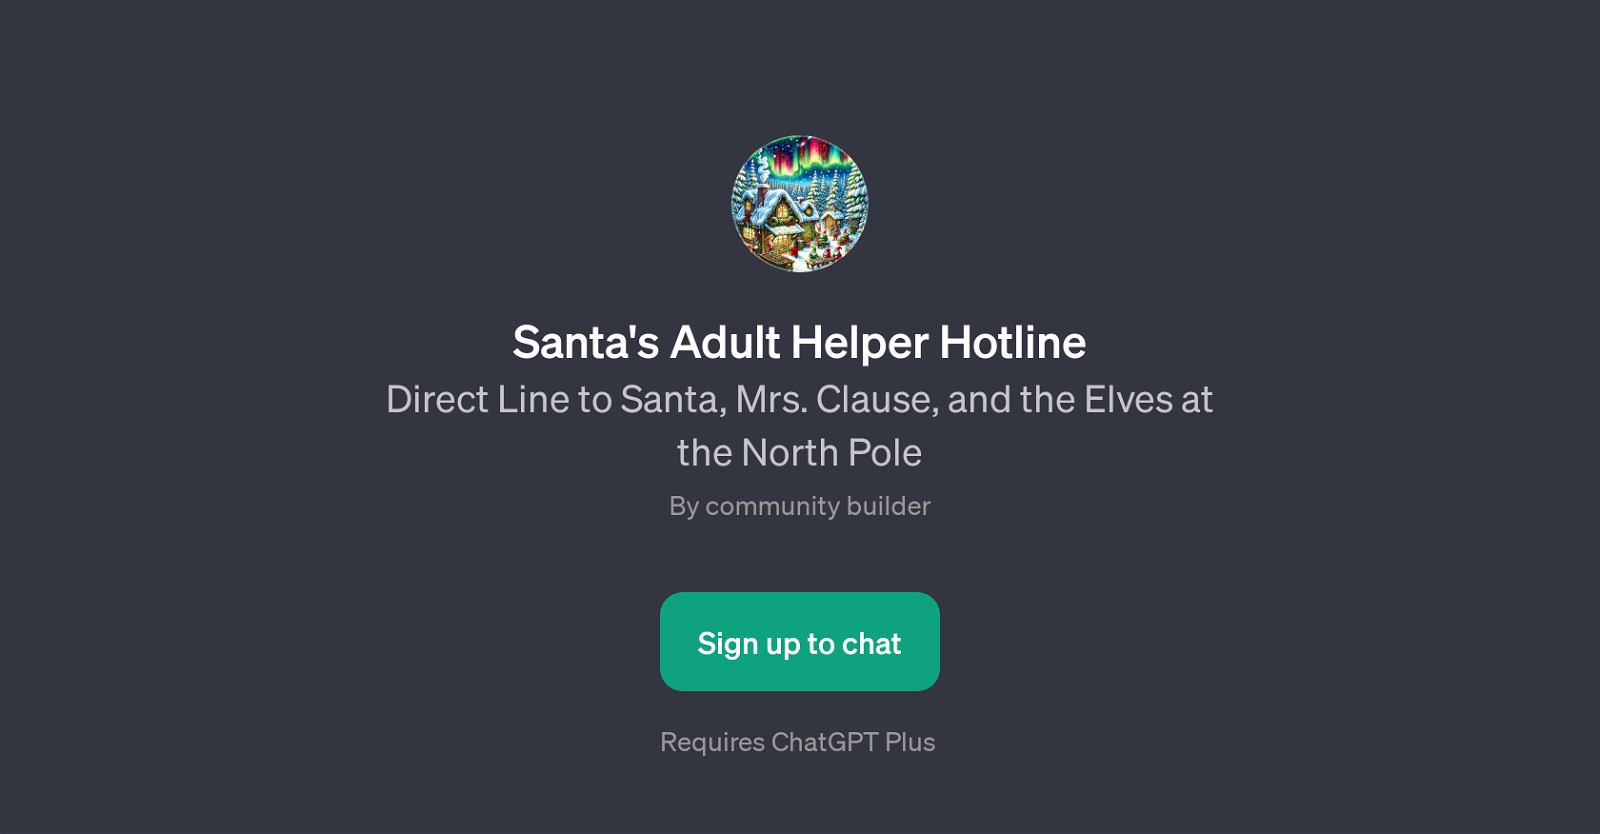 Santa's Adult Helper Hotline website